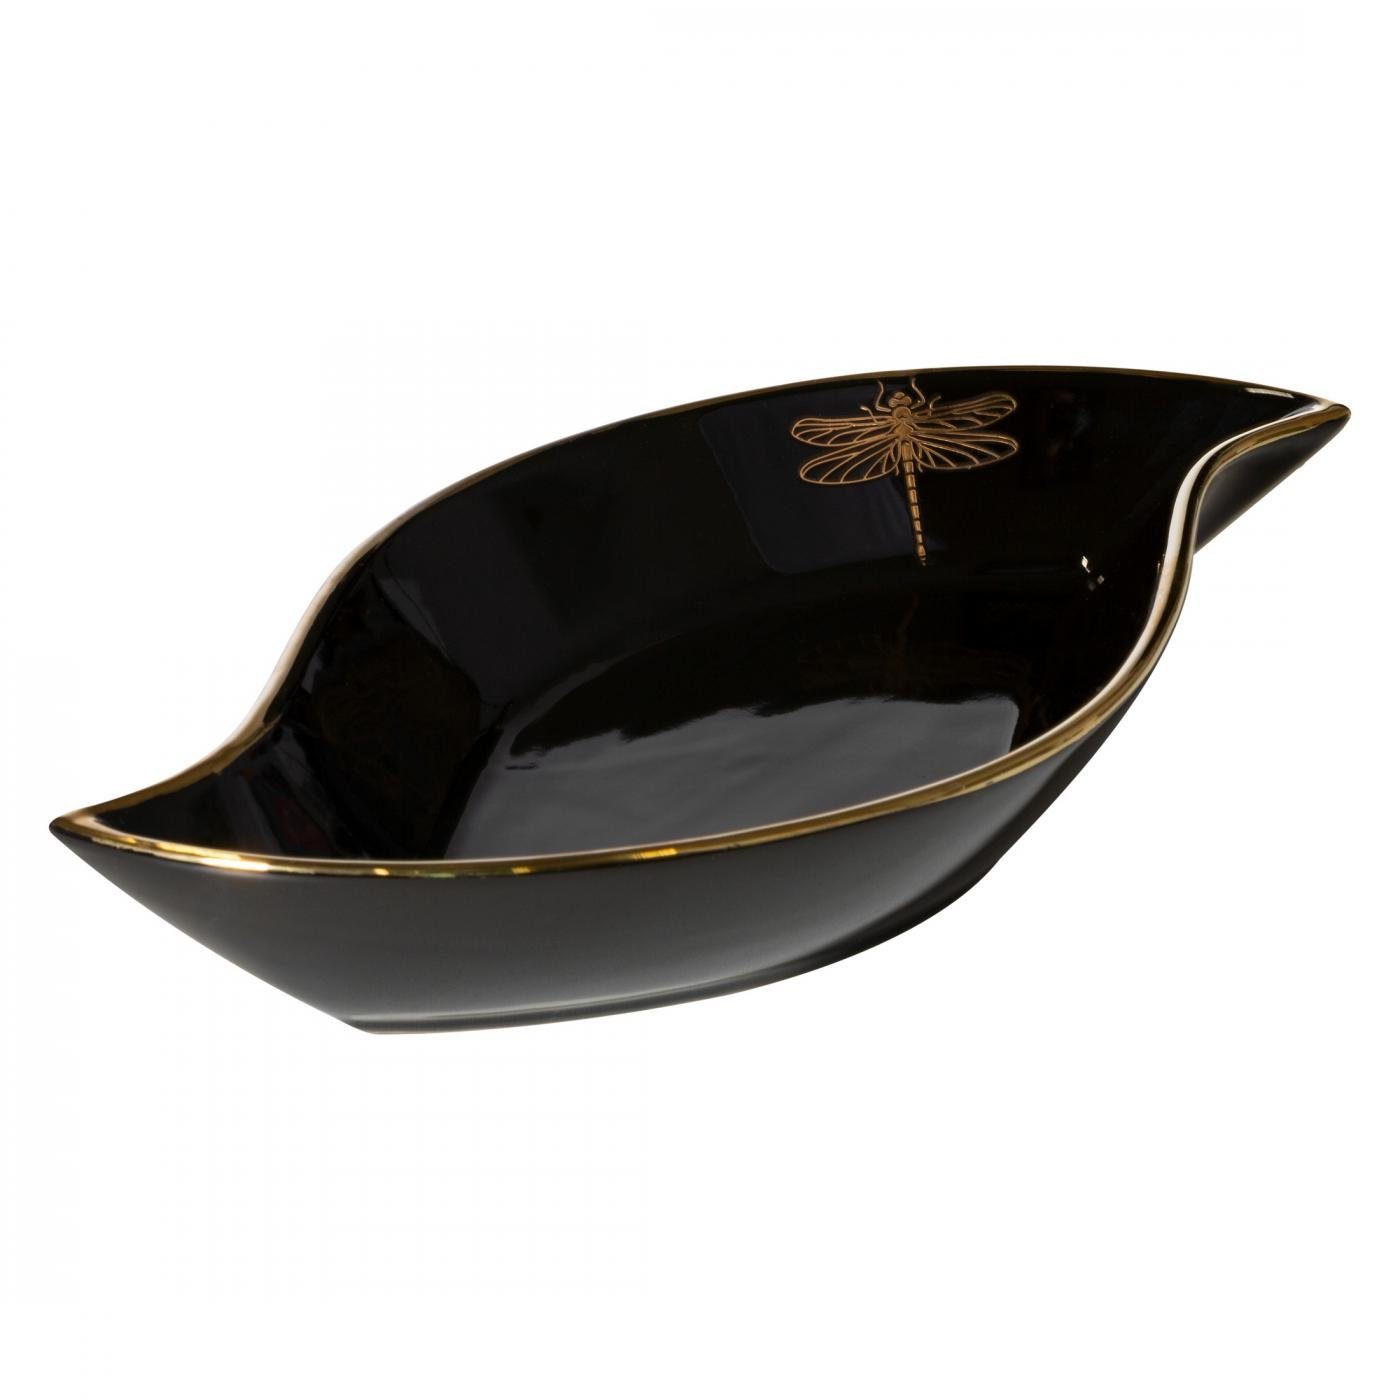 Eurofirany Dekoteller Keramikteller cm Keramik, mit Teller, x 5 31 Schwarz/Gold, Größe 17 x Libellenaufdruck, Farbe goldenem